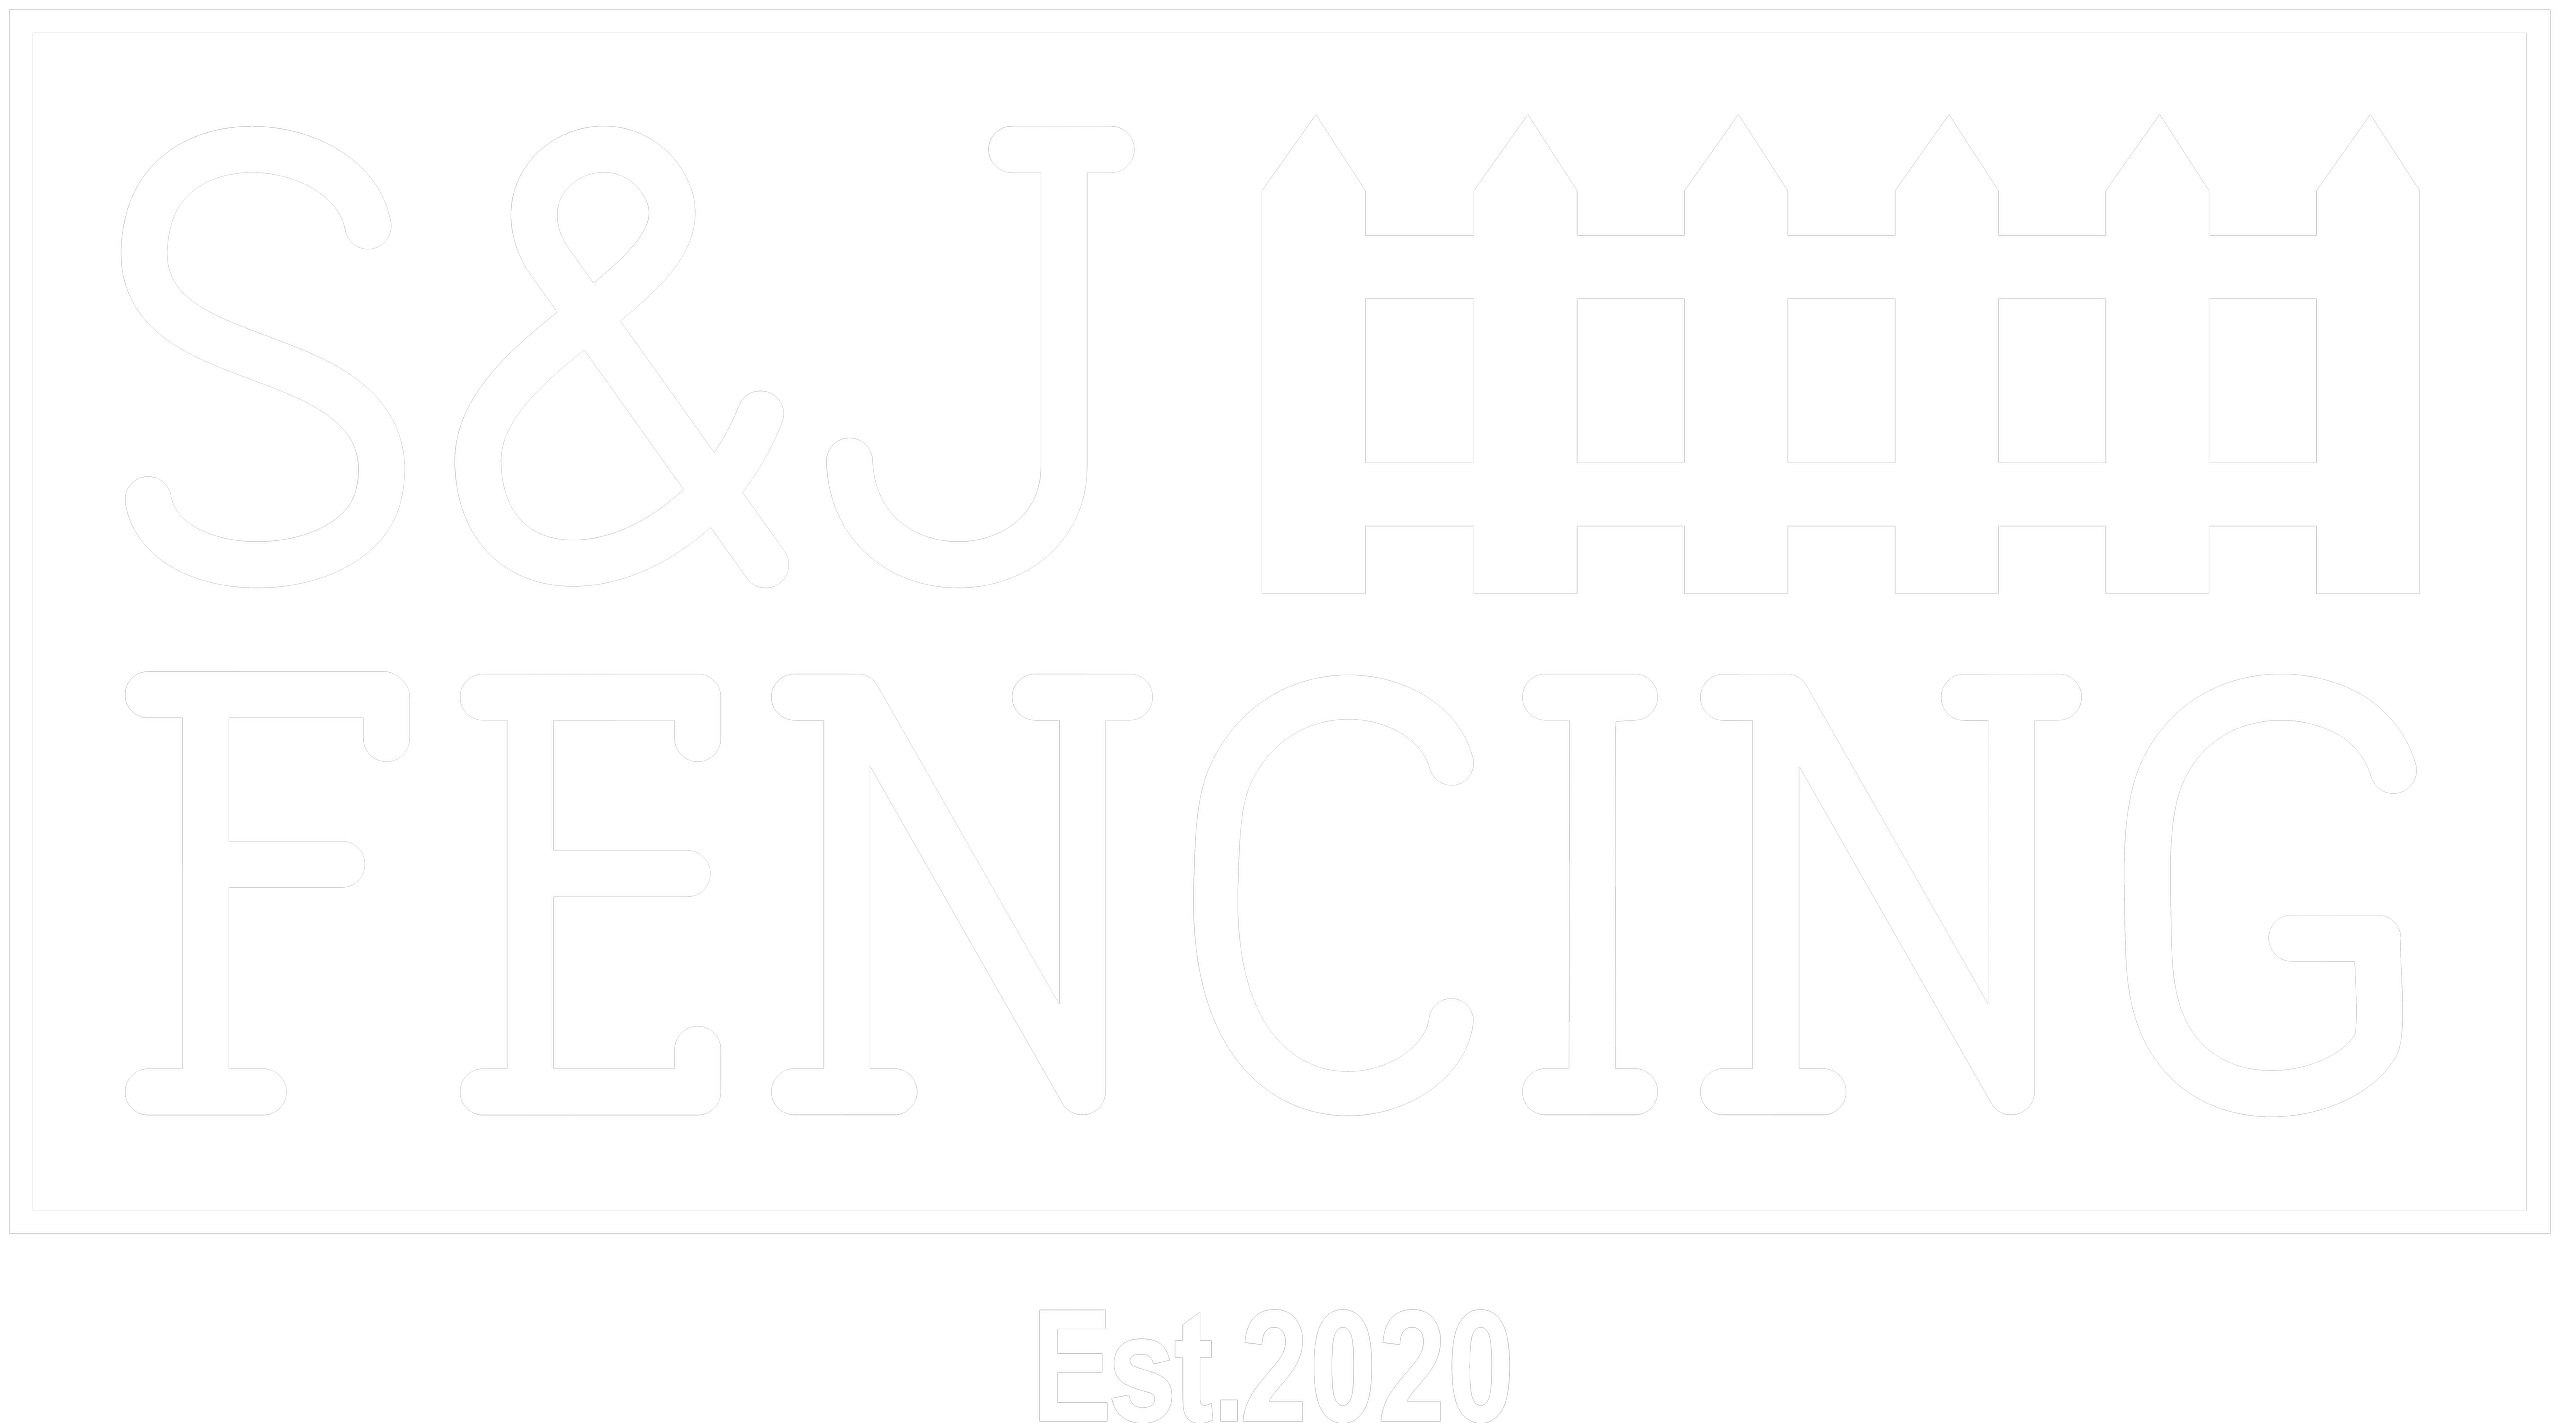 S&J Fencing Ltd